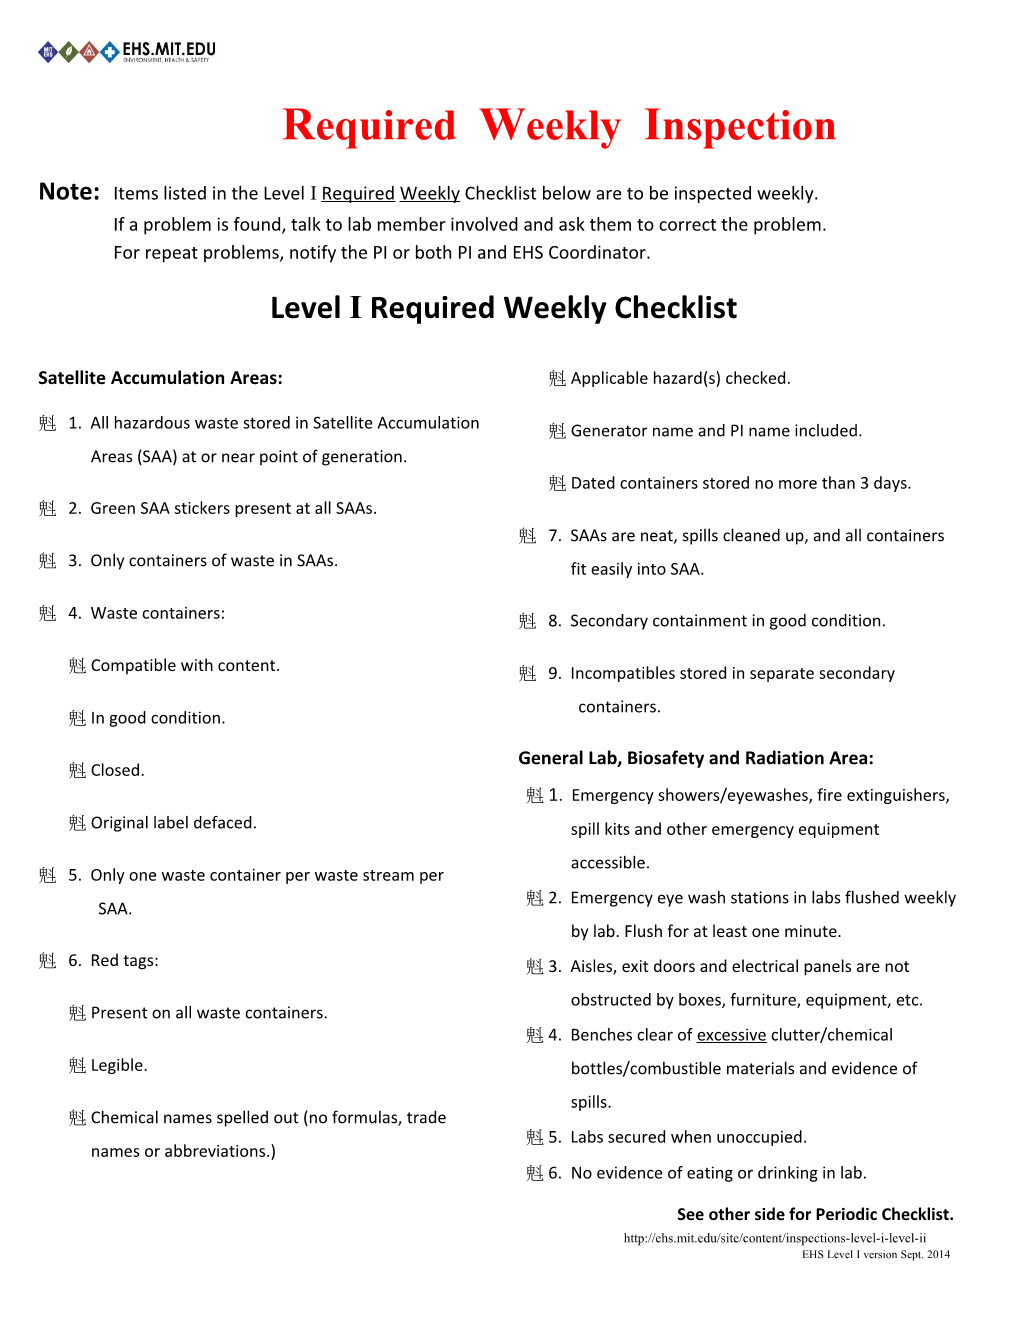 Level I Checklist for SAA Areas